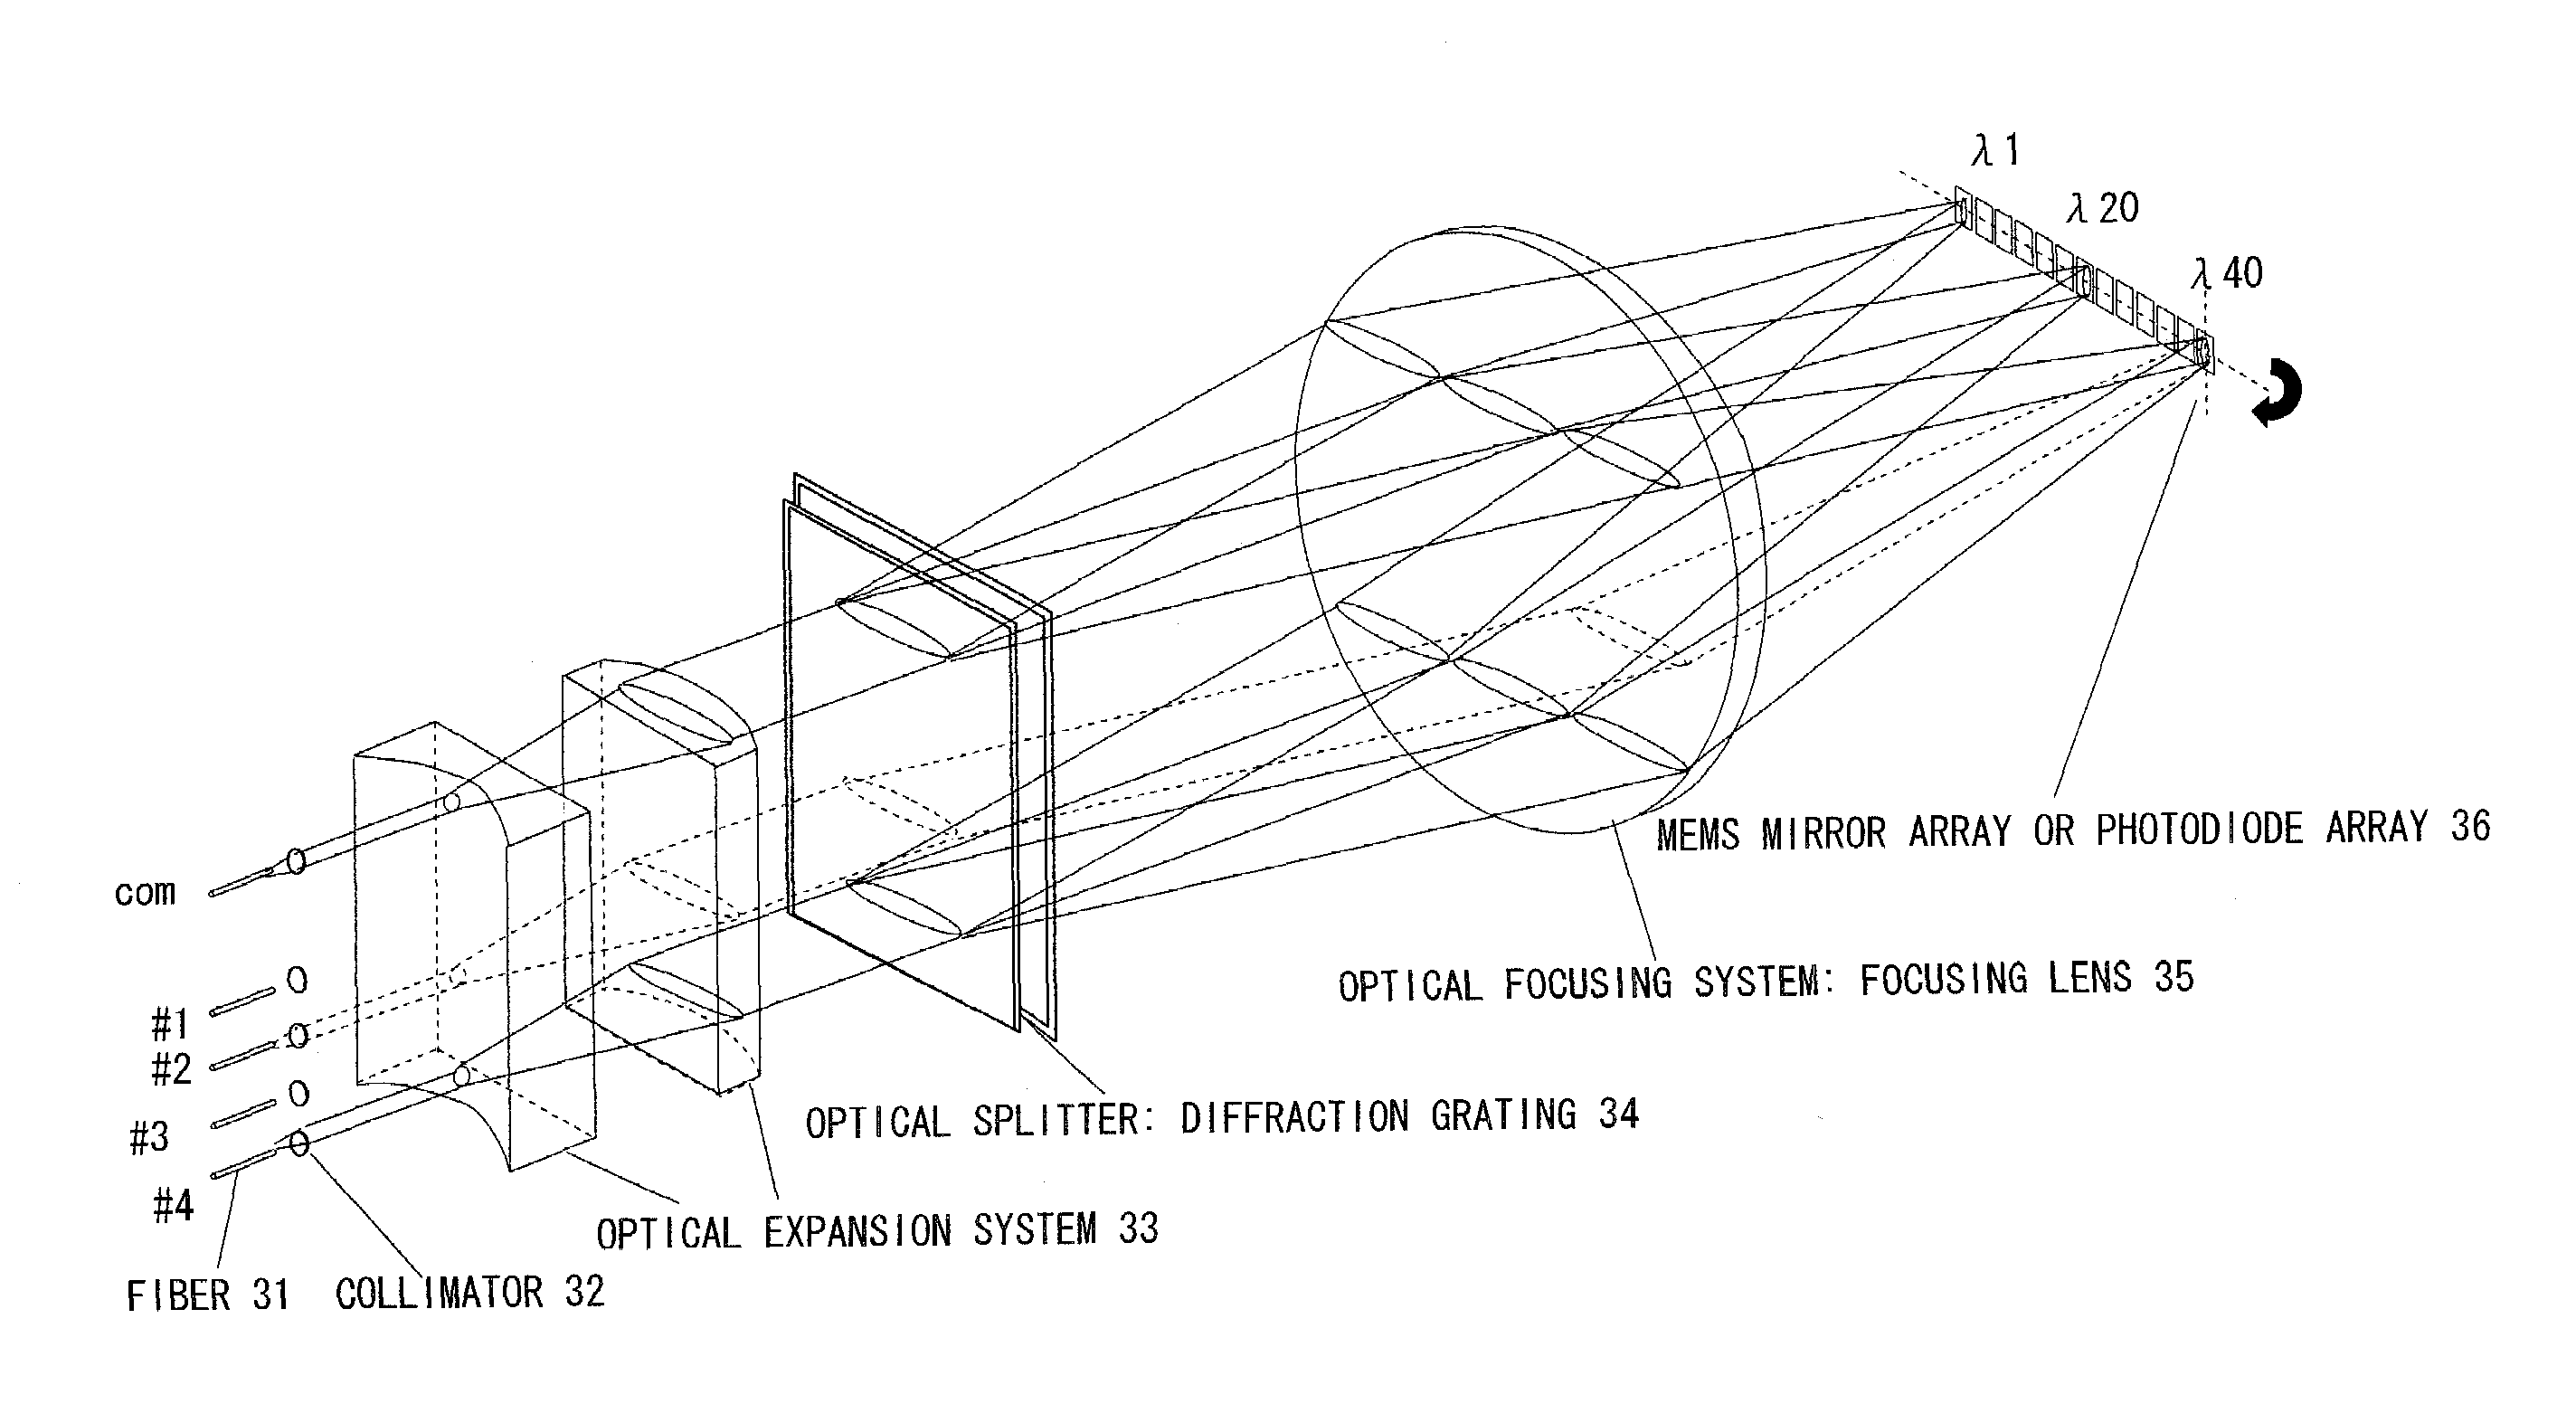 Multiple-wavelength spectroscopic apparatus